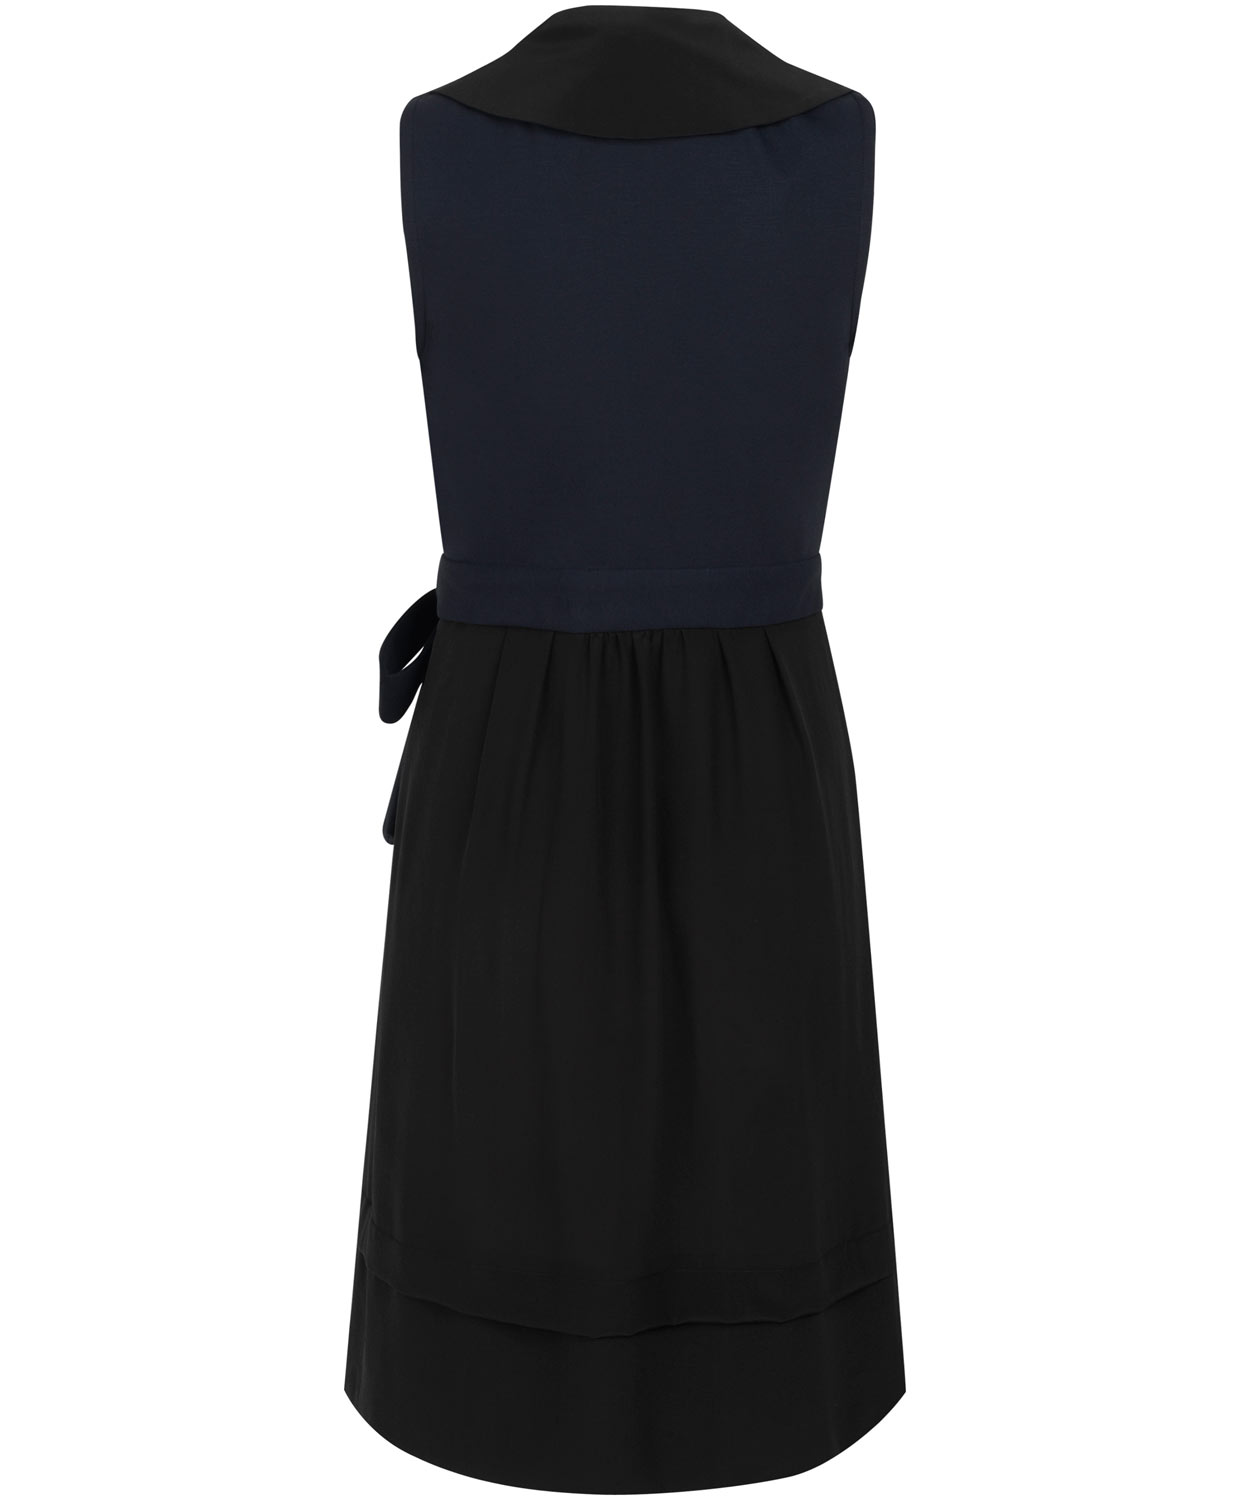 Lyst - Sonia By Sonia Rykiel Navy and Black Ruffle Wrap Dress in Blue